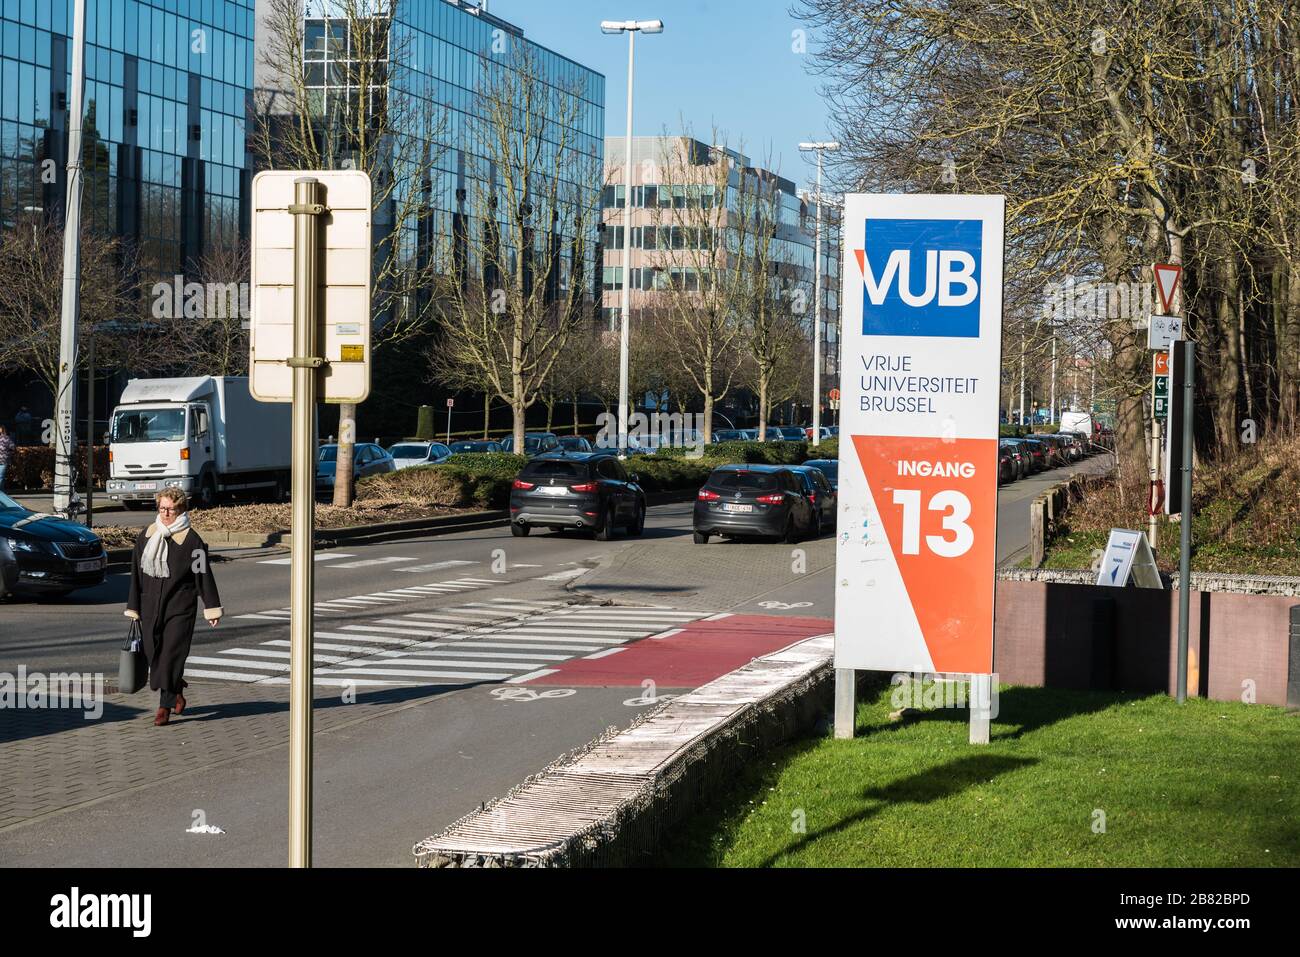 Ixelles, Brussels Capital Region / Belgium - 02 06 2020: Students walking at the VUB university campus Stock Photo